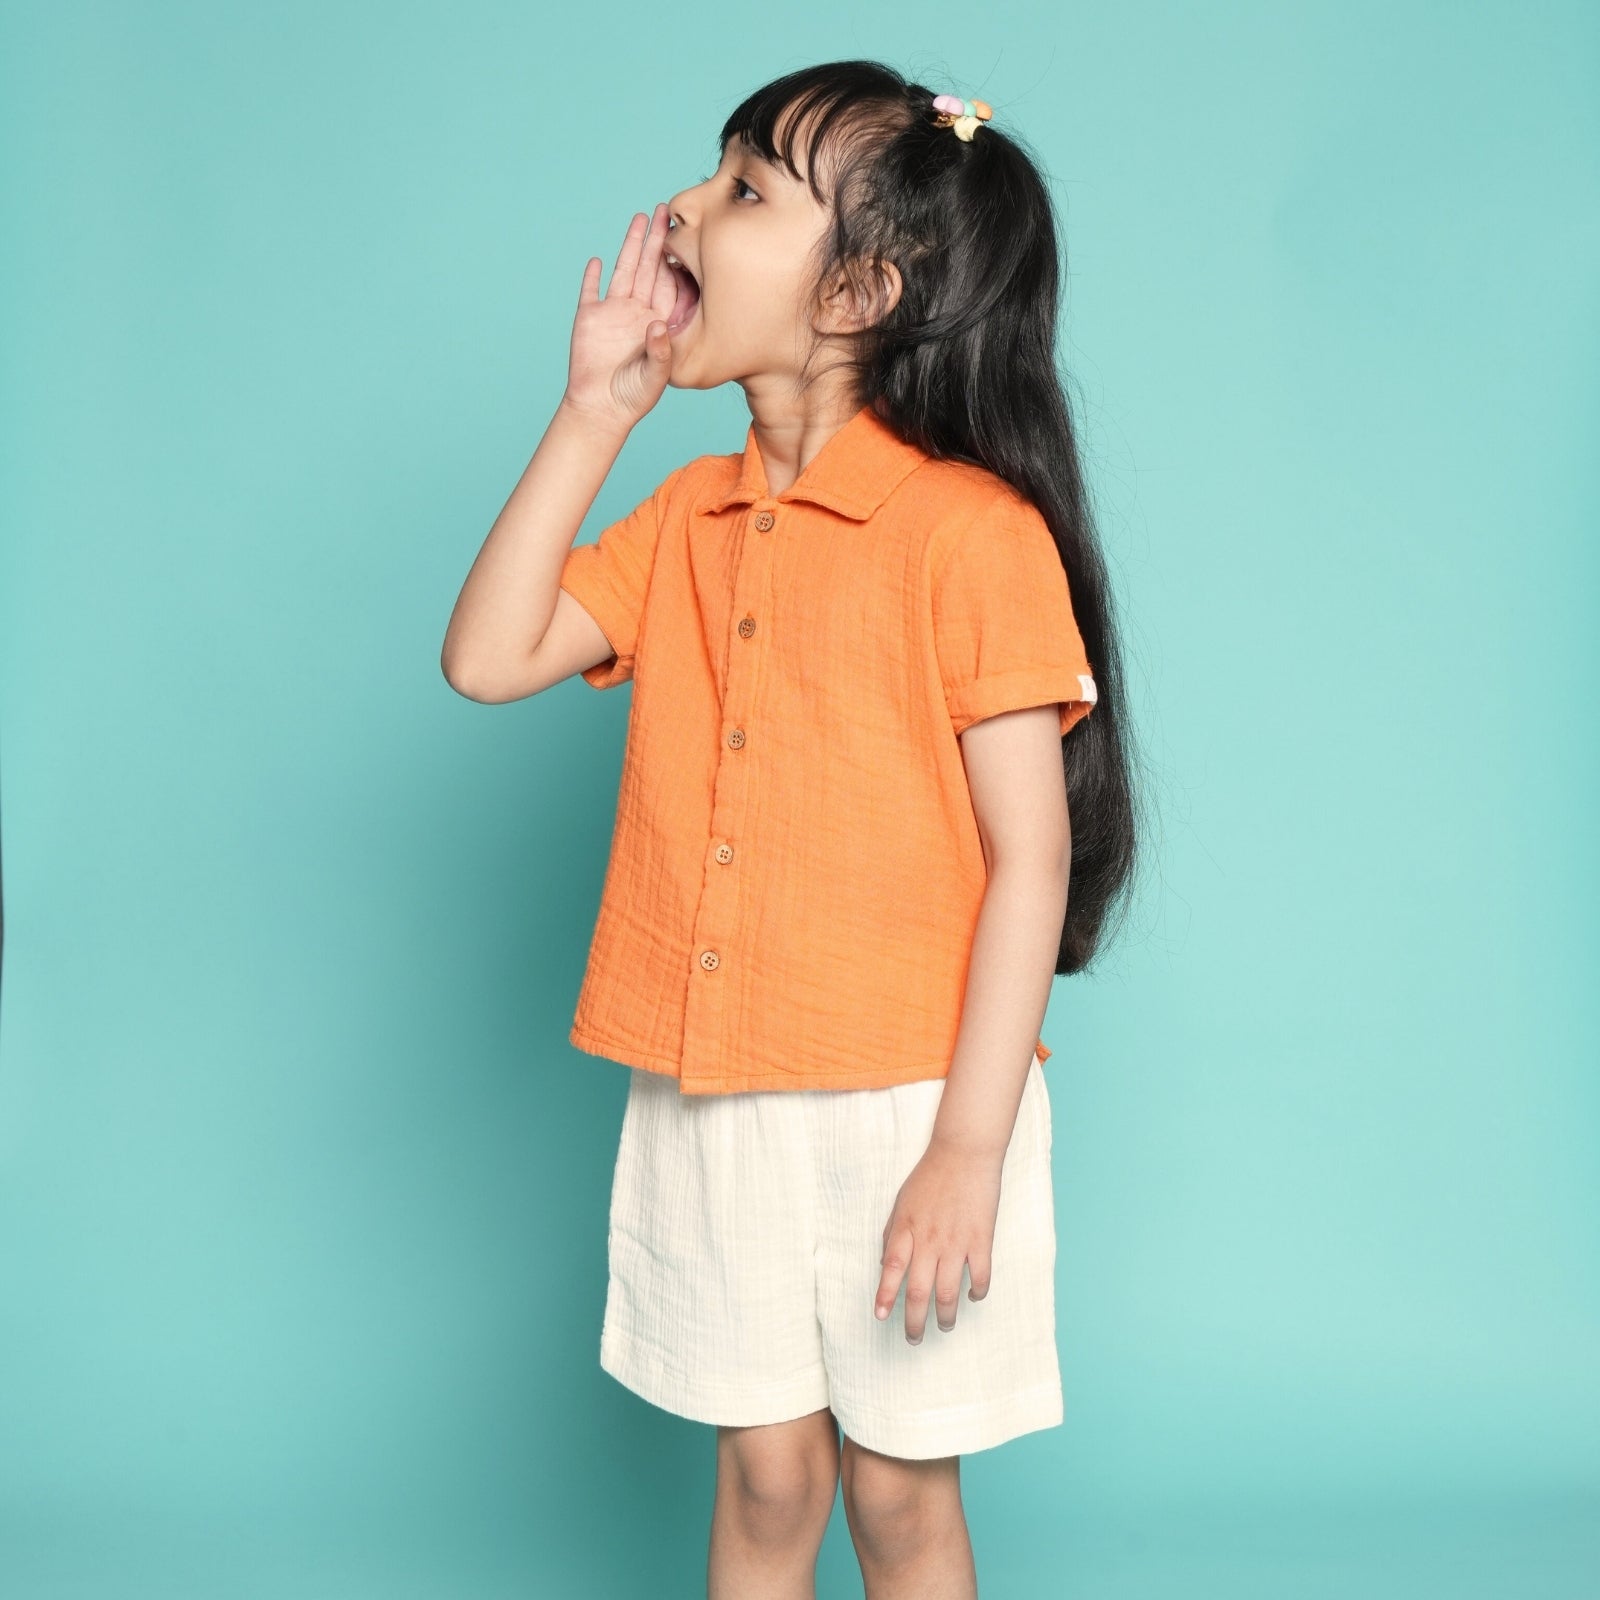 Kids of Greendeer Resort Collar Shirt with Resort Short Orange & White